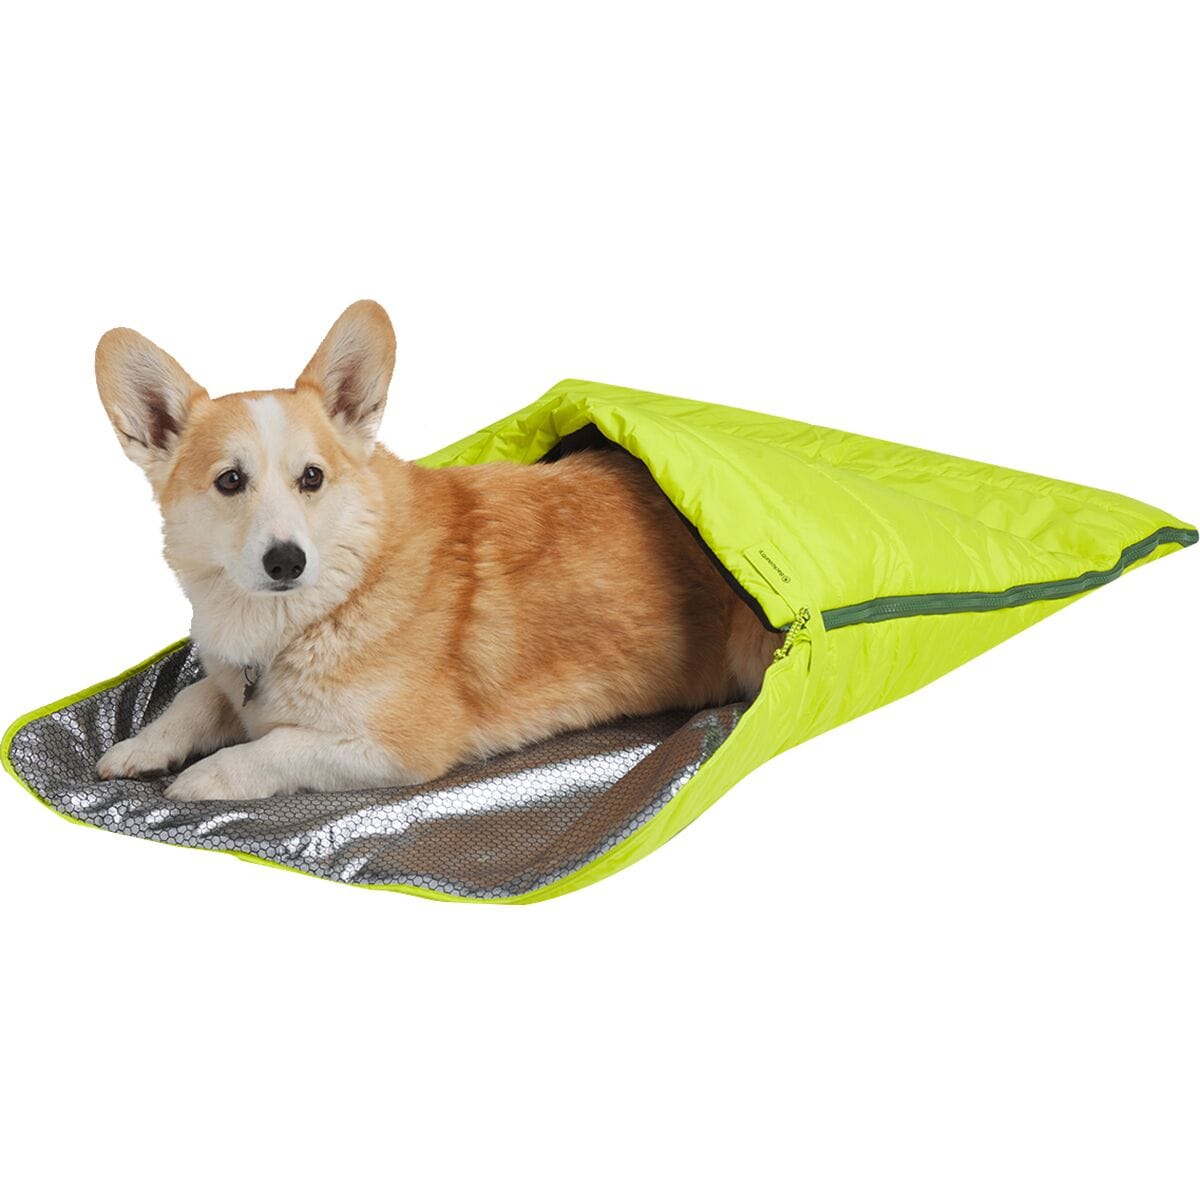 Comfy Canine Companion. The Happy Napper Husky Sleeping Bag